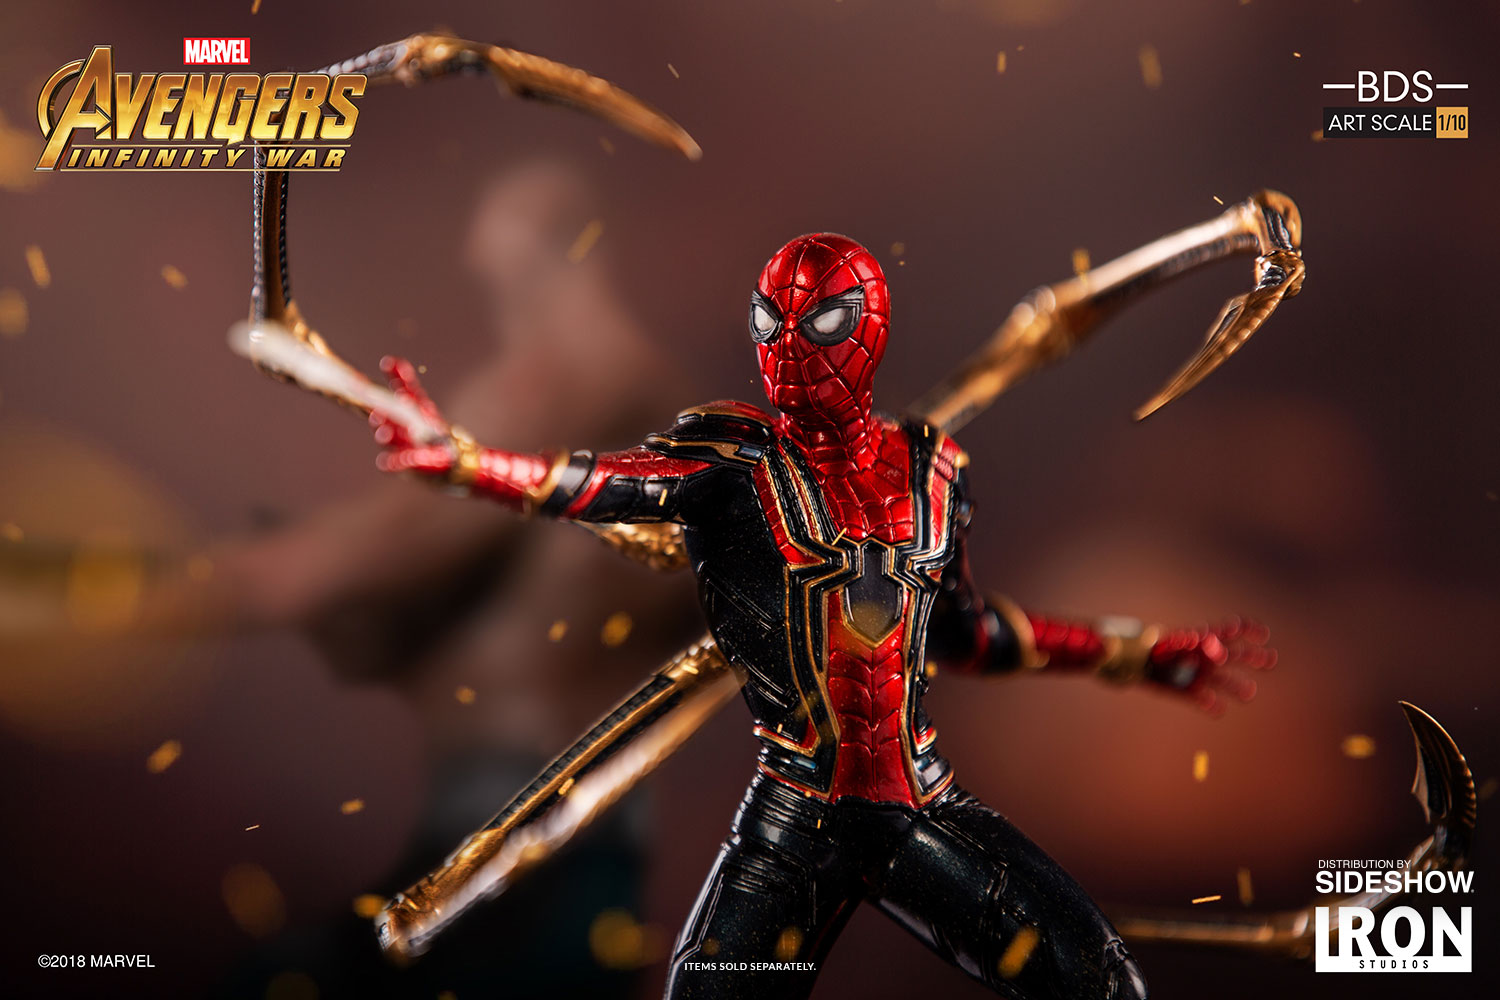 marvel-avengers-infinity-war-iron-spider-man-statue-iron-studios-903606-04.jpg